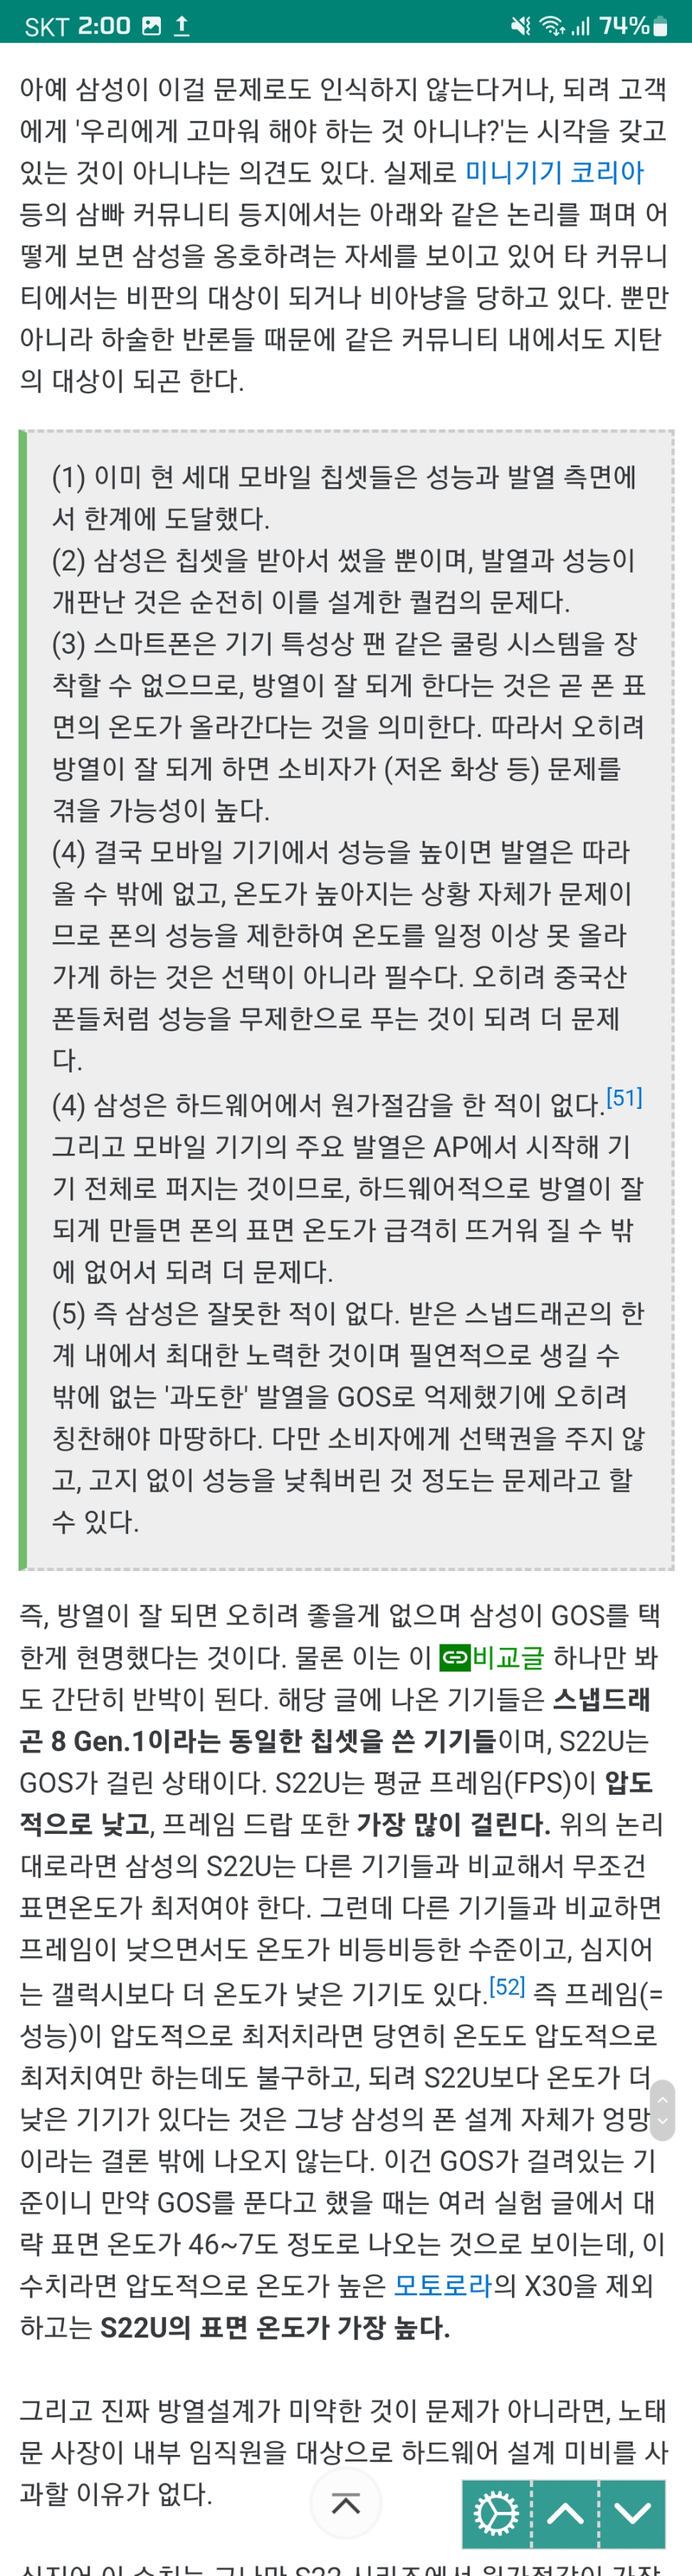 Screenshot_20220407-020056_Samsung Internet.jpg